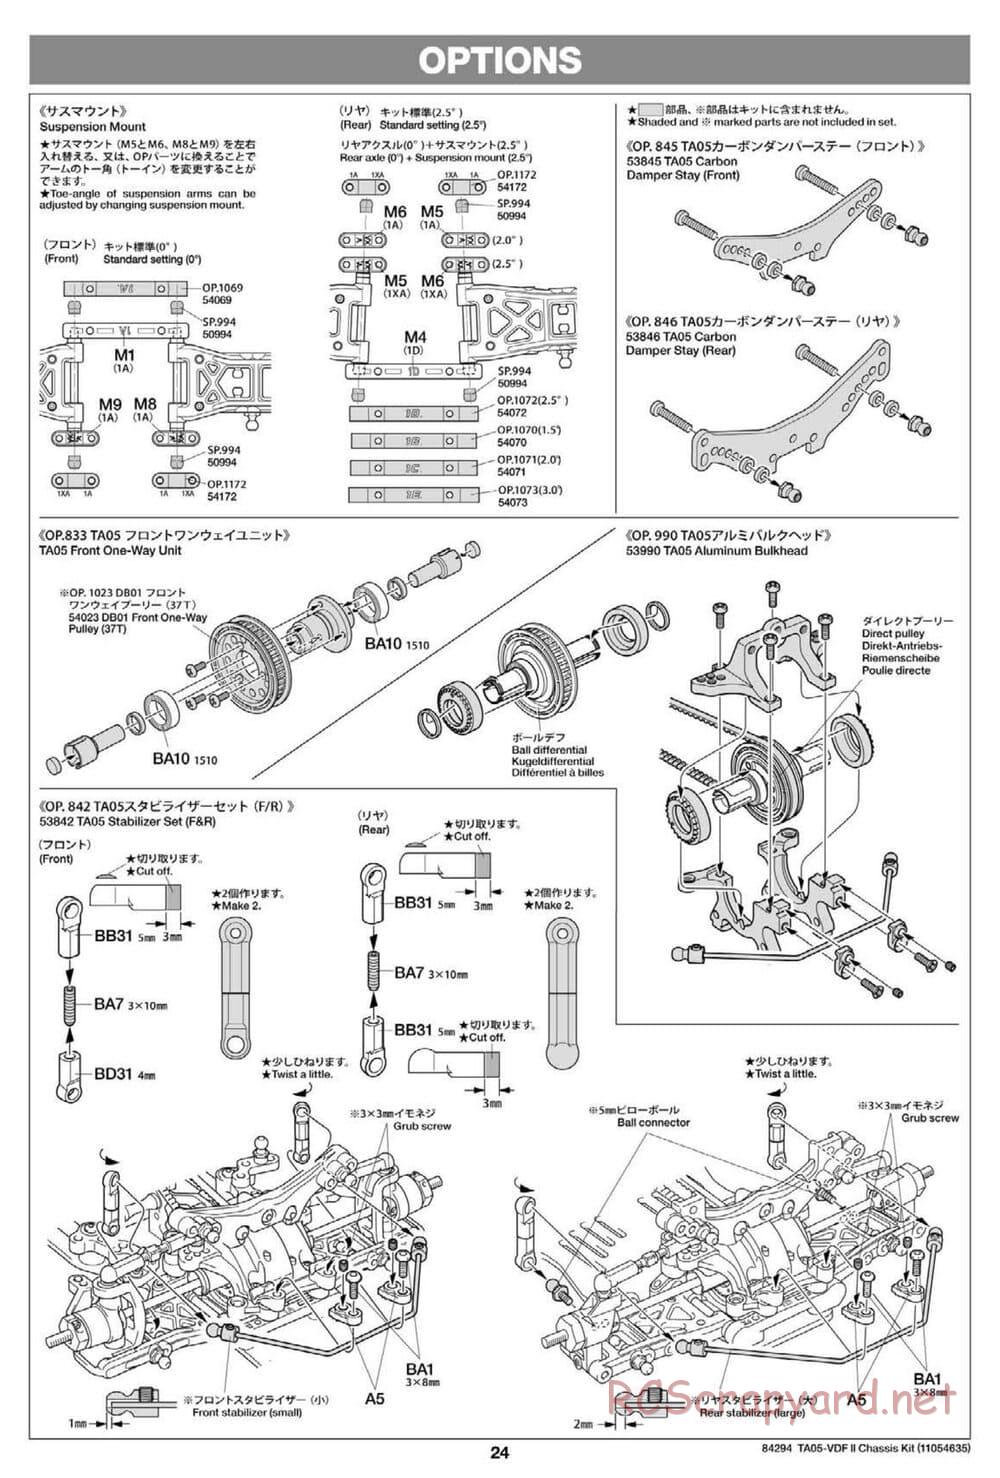 Tamiya - TA05-VDF II Drift Chassis - Manual - Page 24